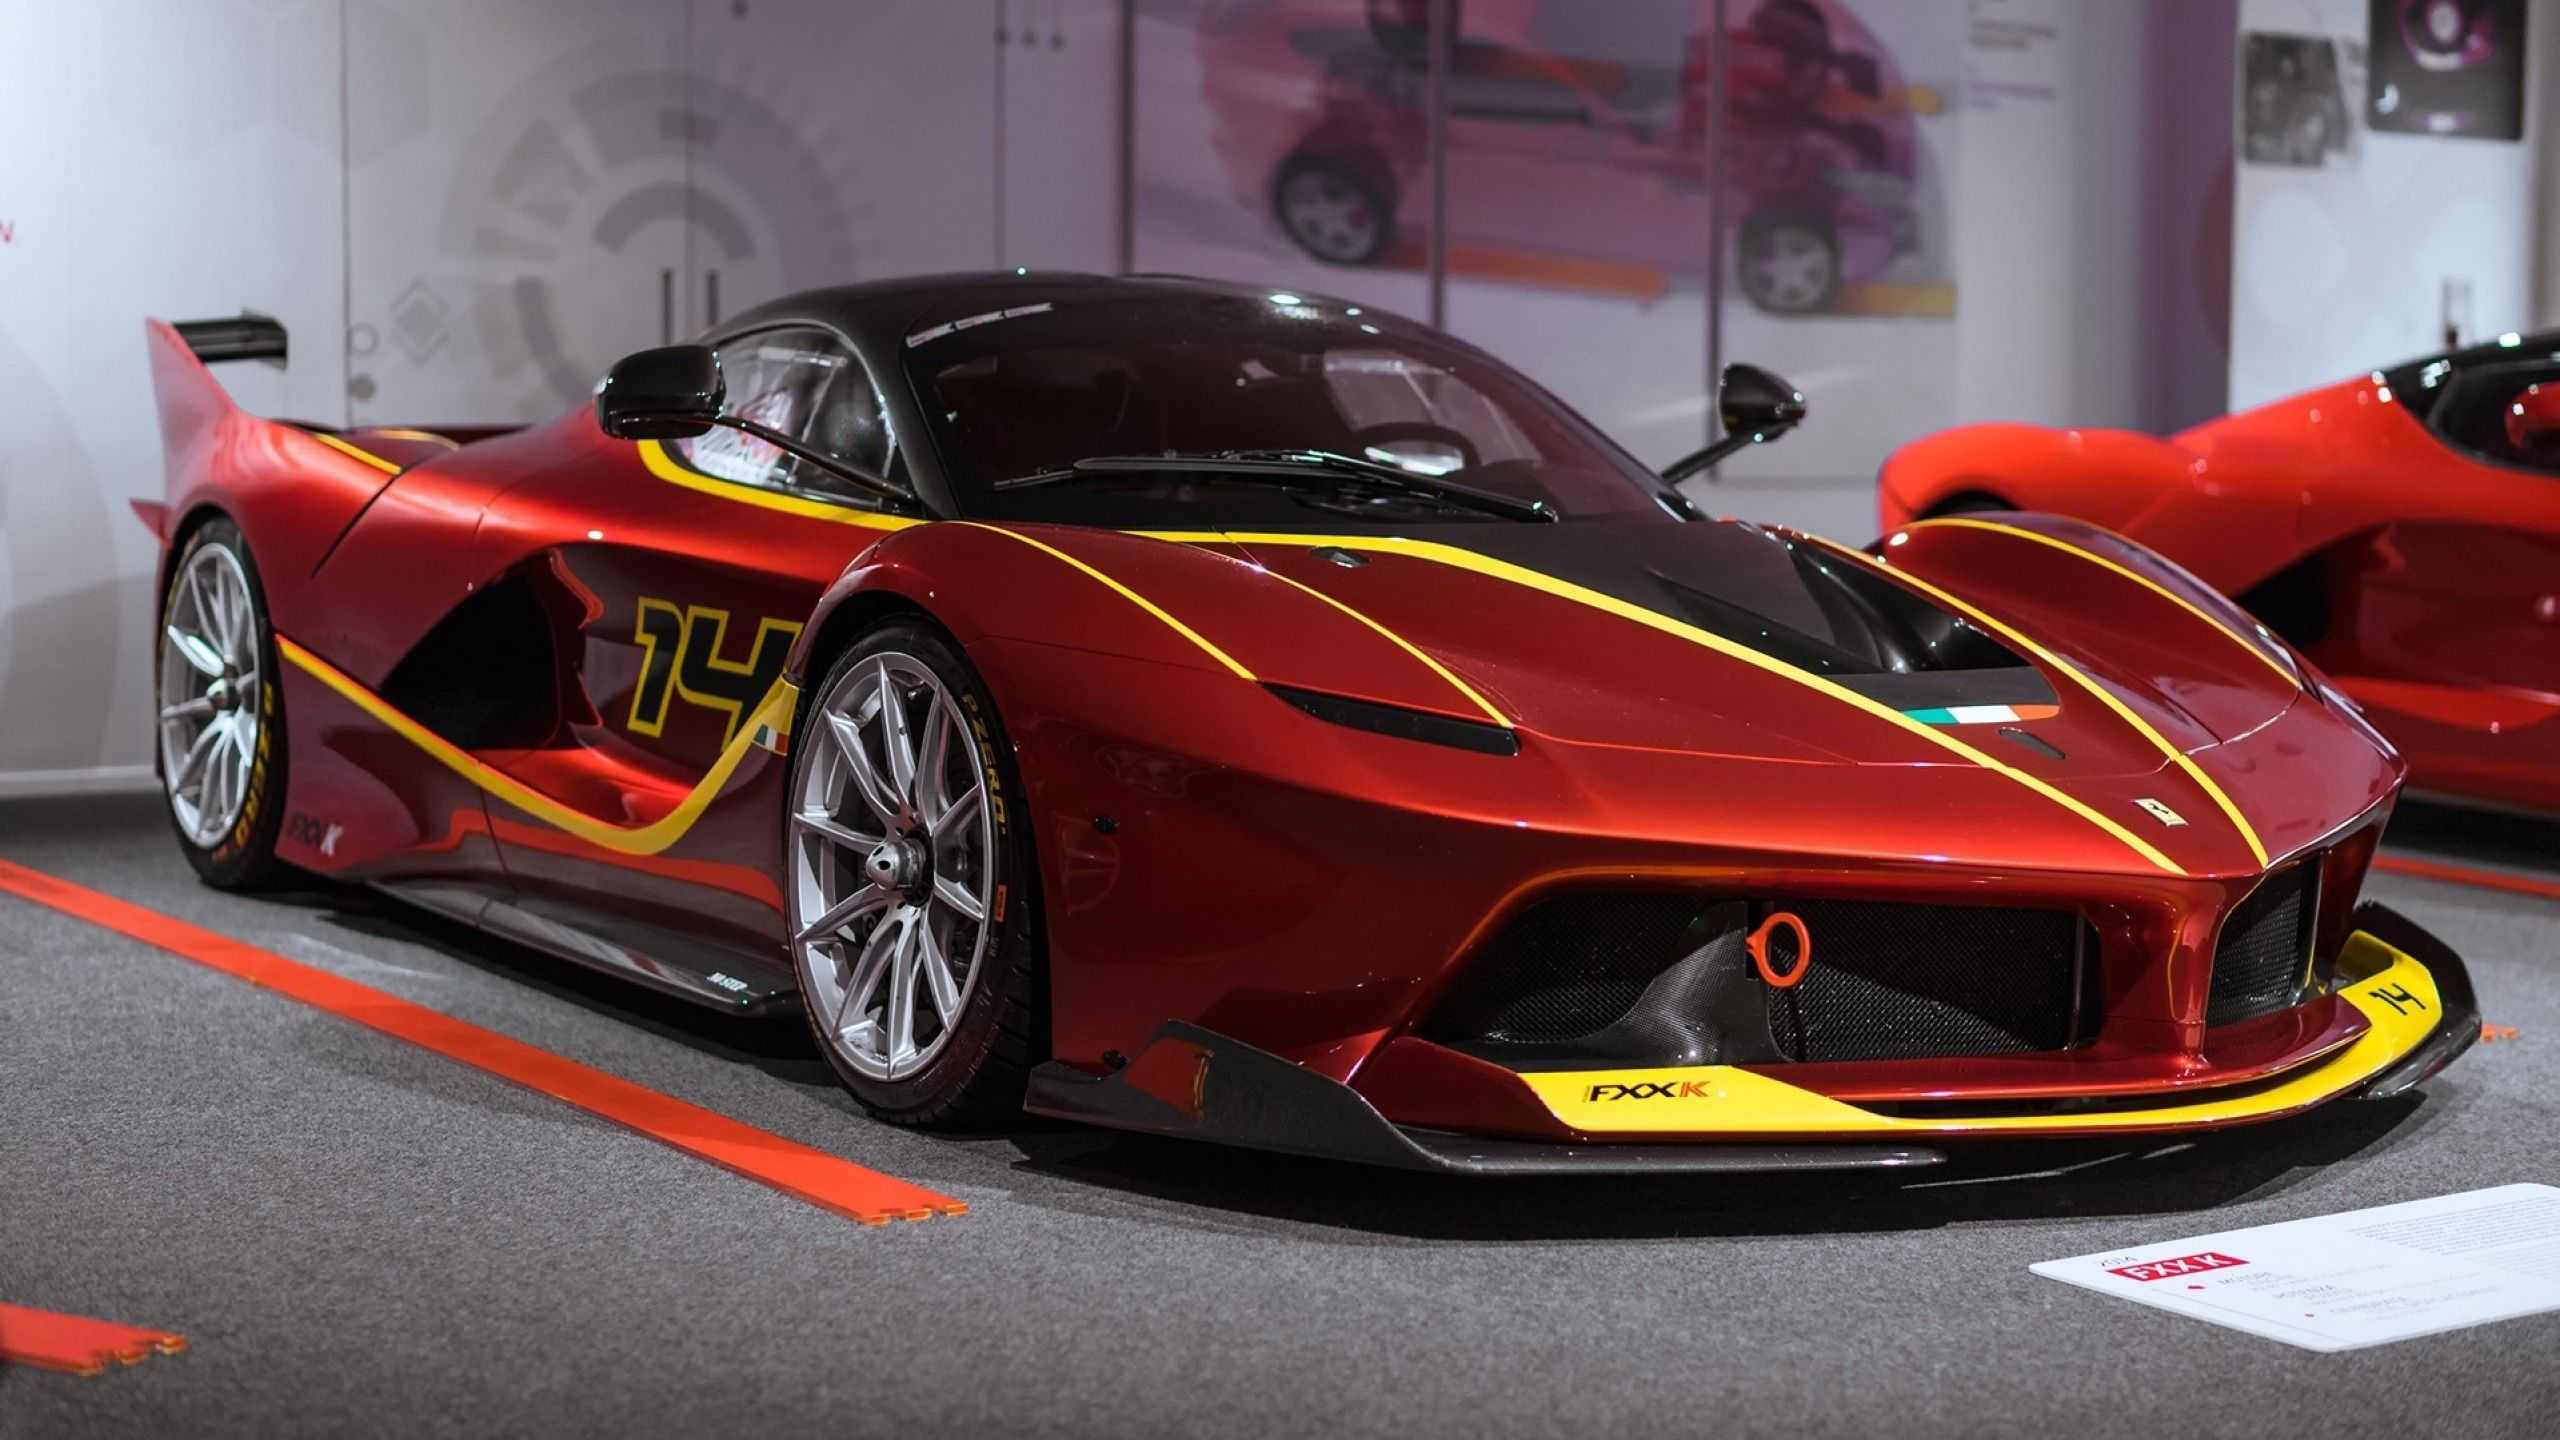 Ferrari fxx evoluzione